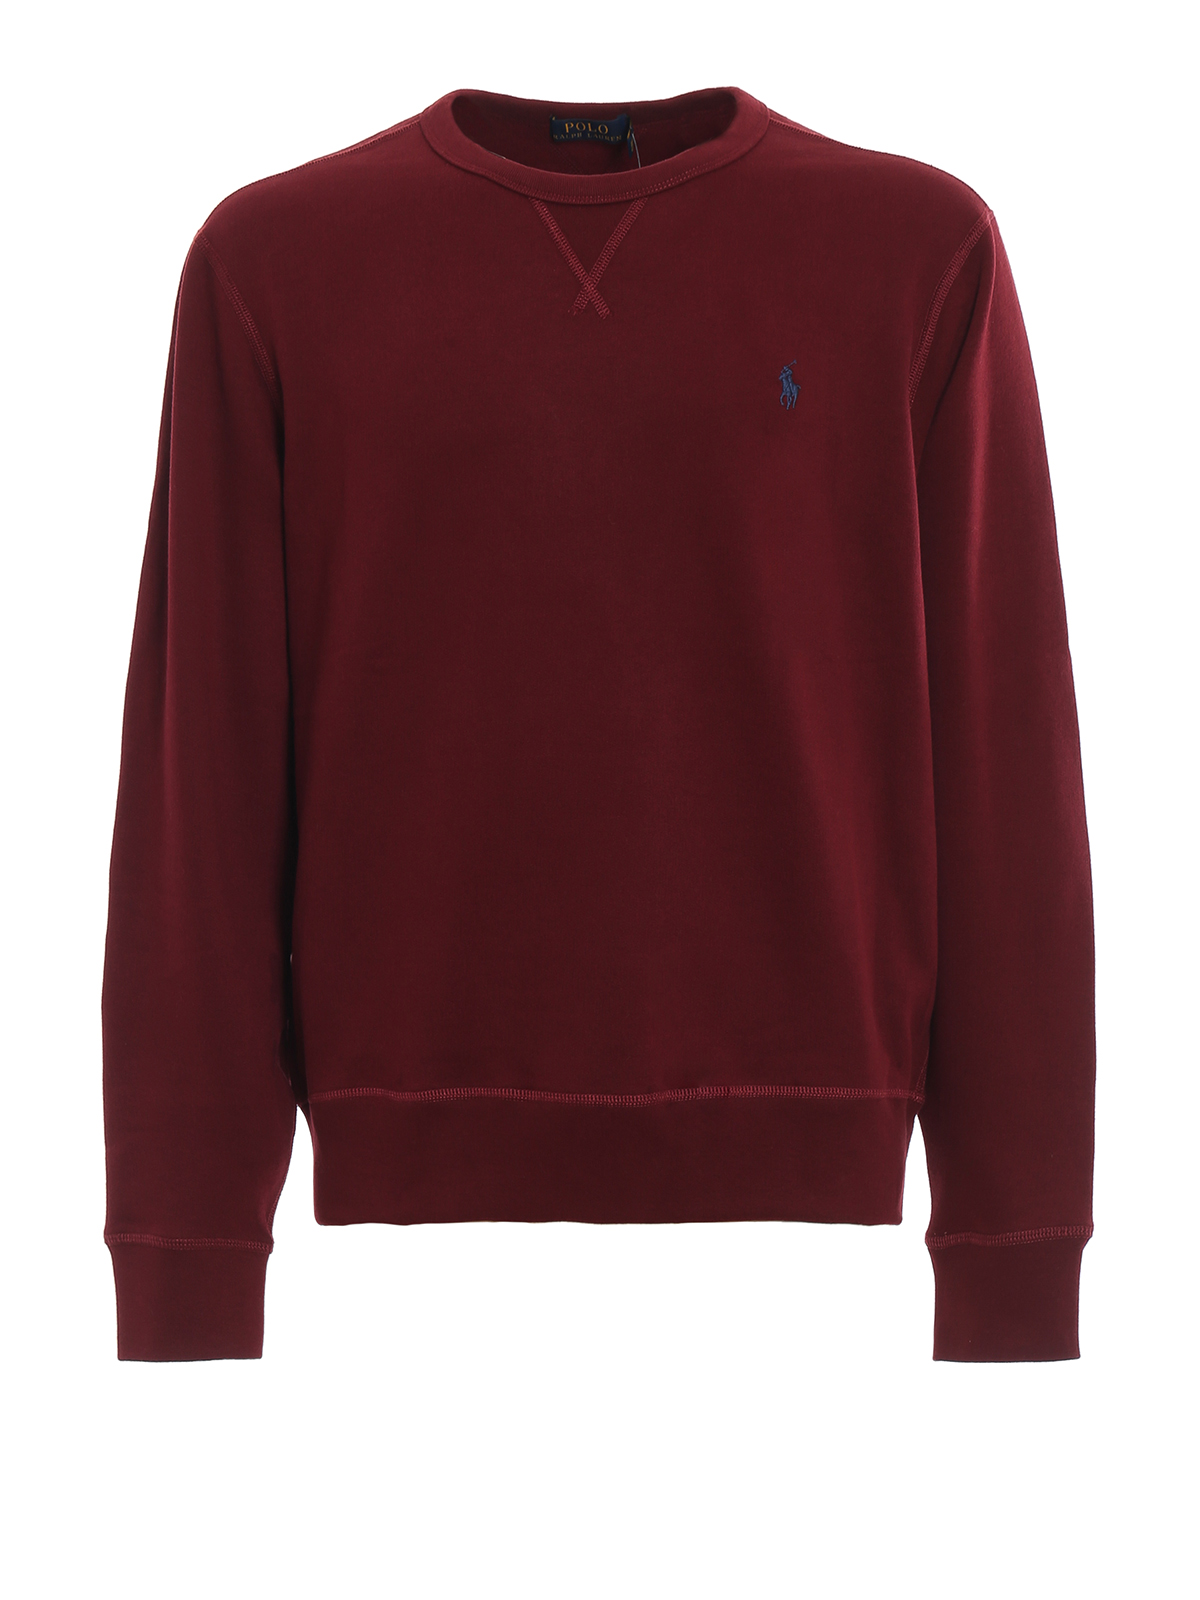 Polo Ralph Lauren - Burgundy cotton blend sweatshirt - Sweatshirts ...